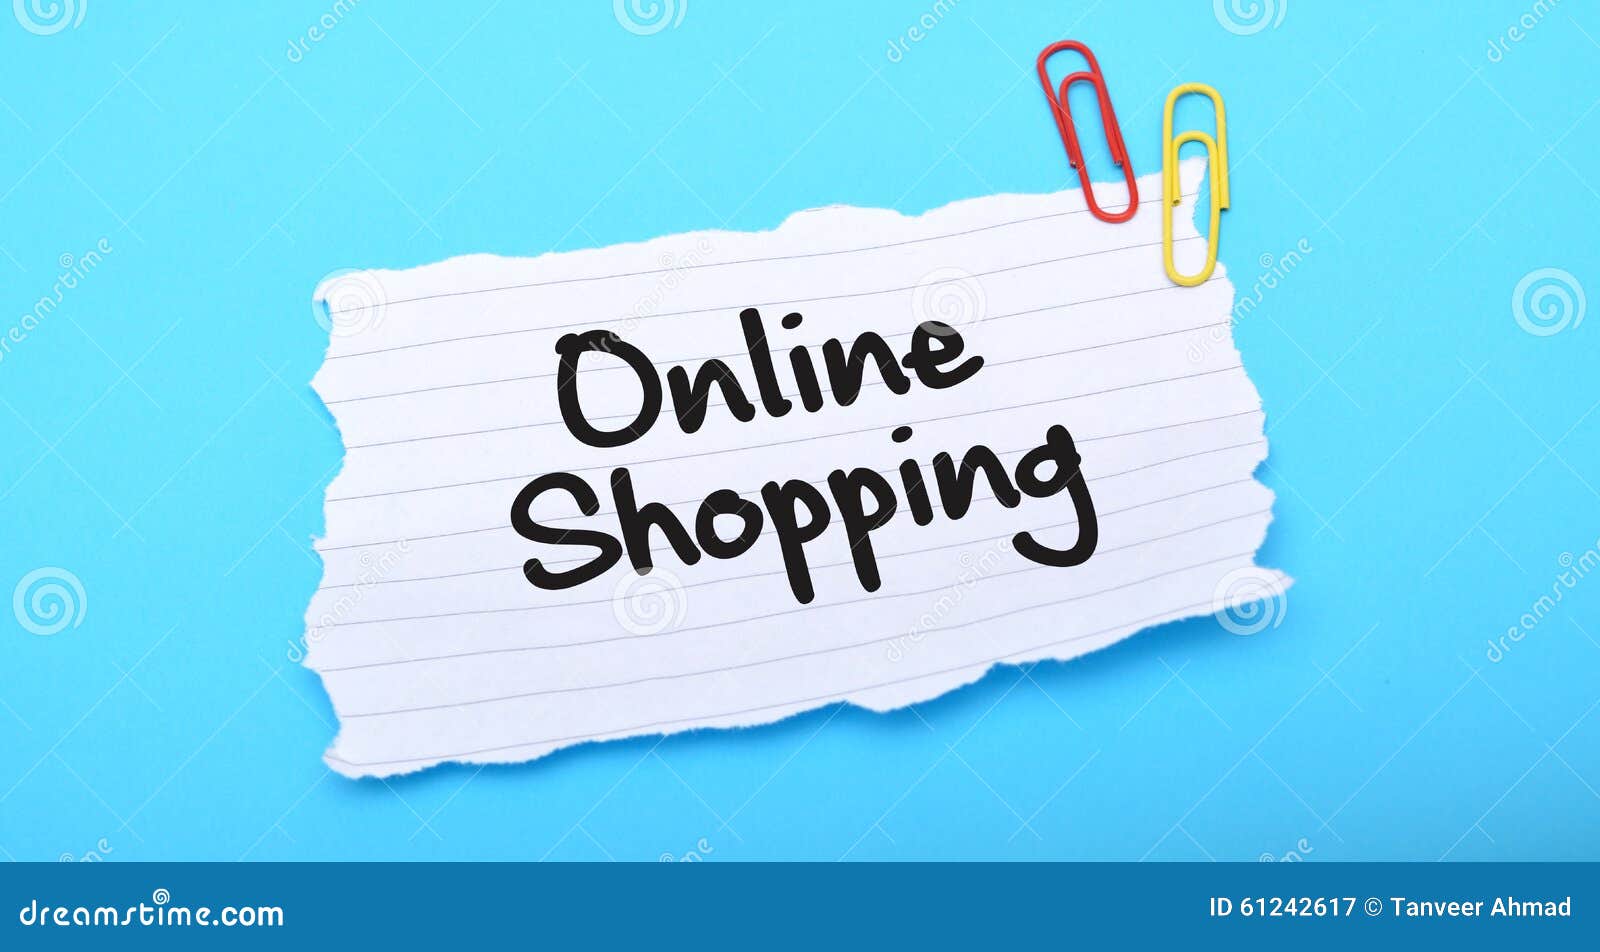 lalola chile online shopping app